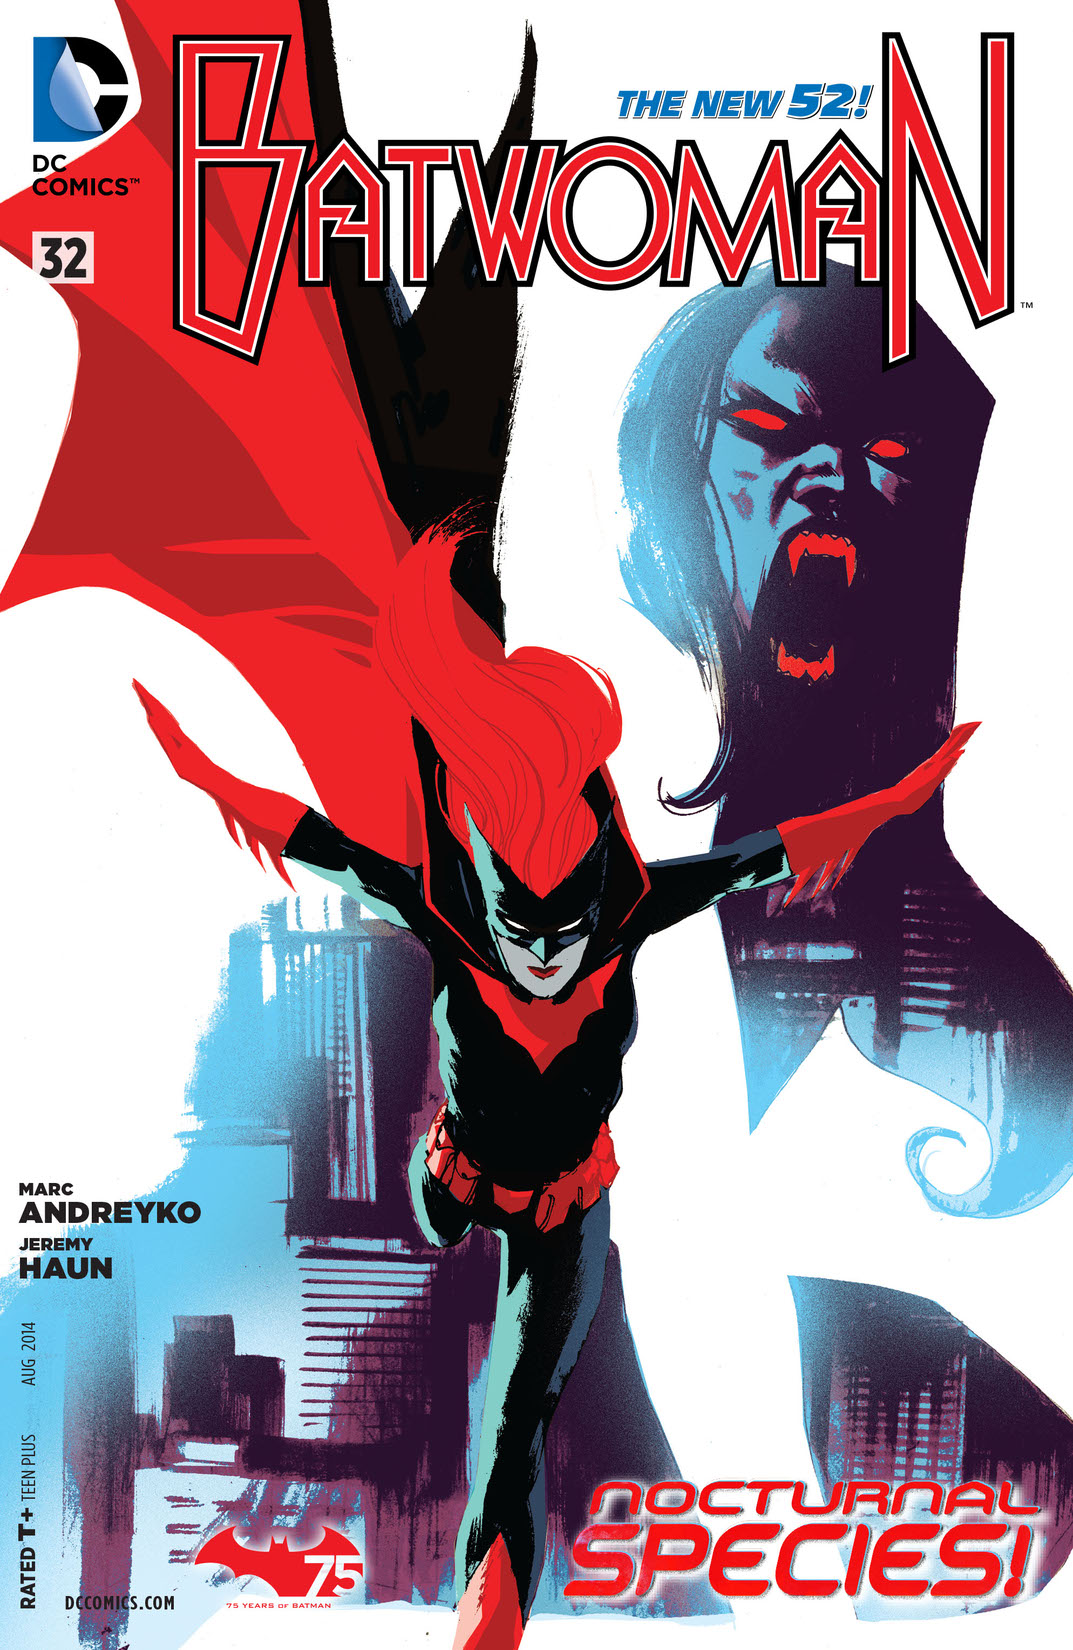 Batwoman (2011-) #32 preview images